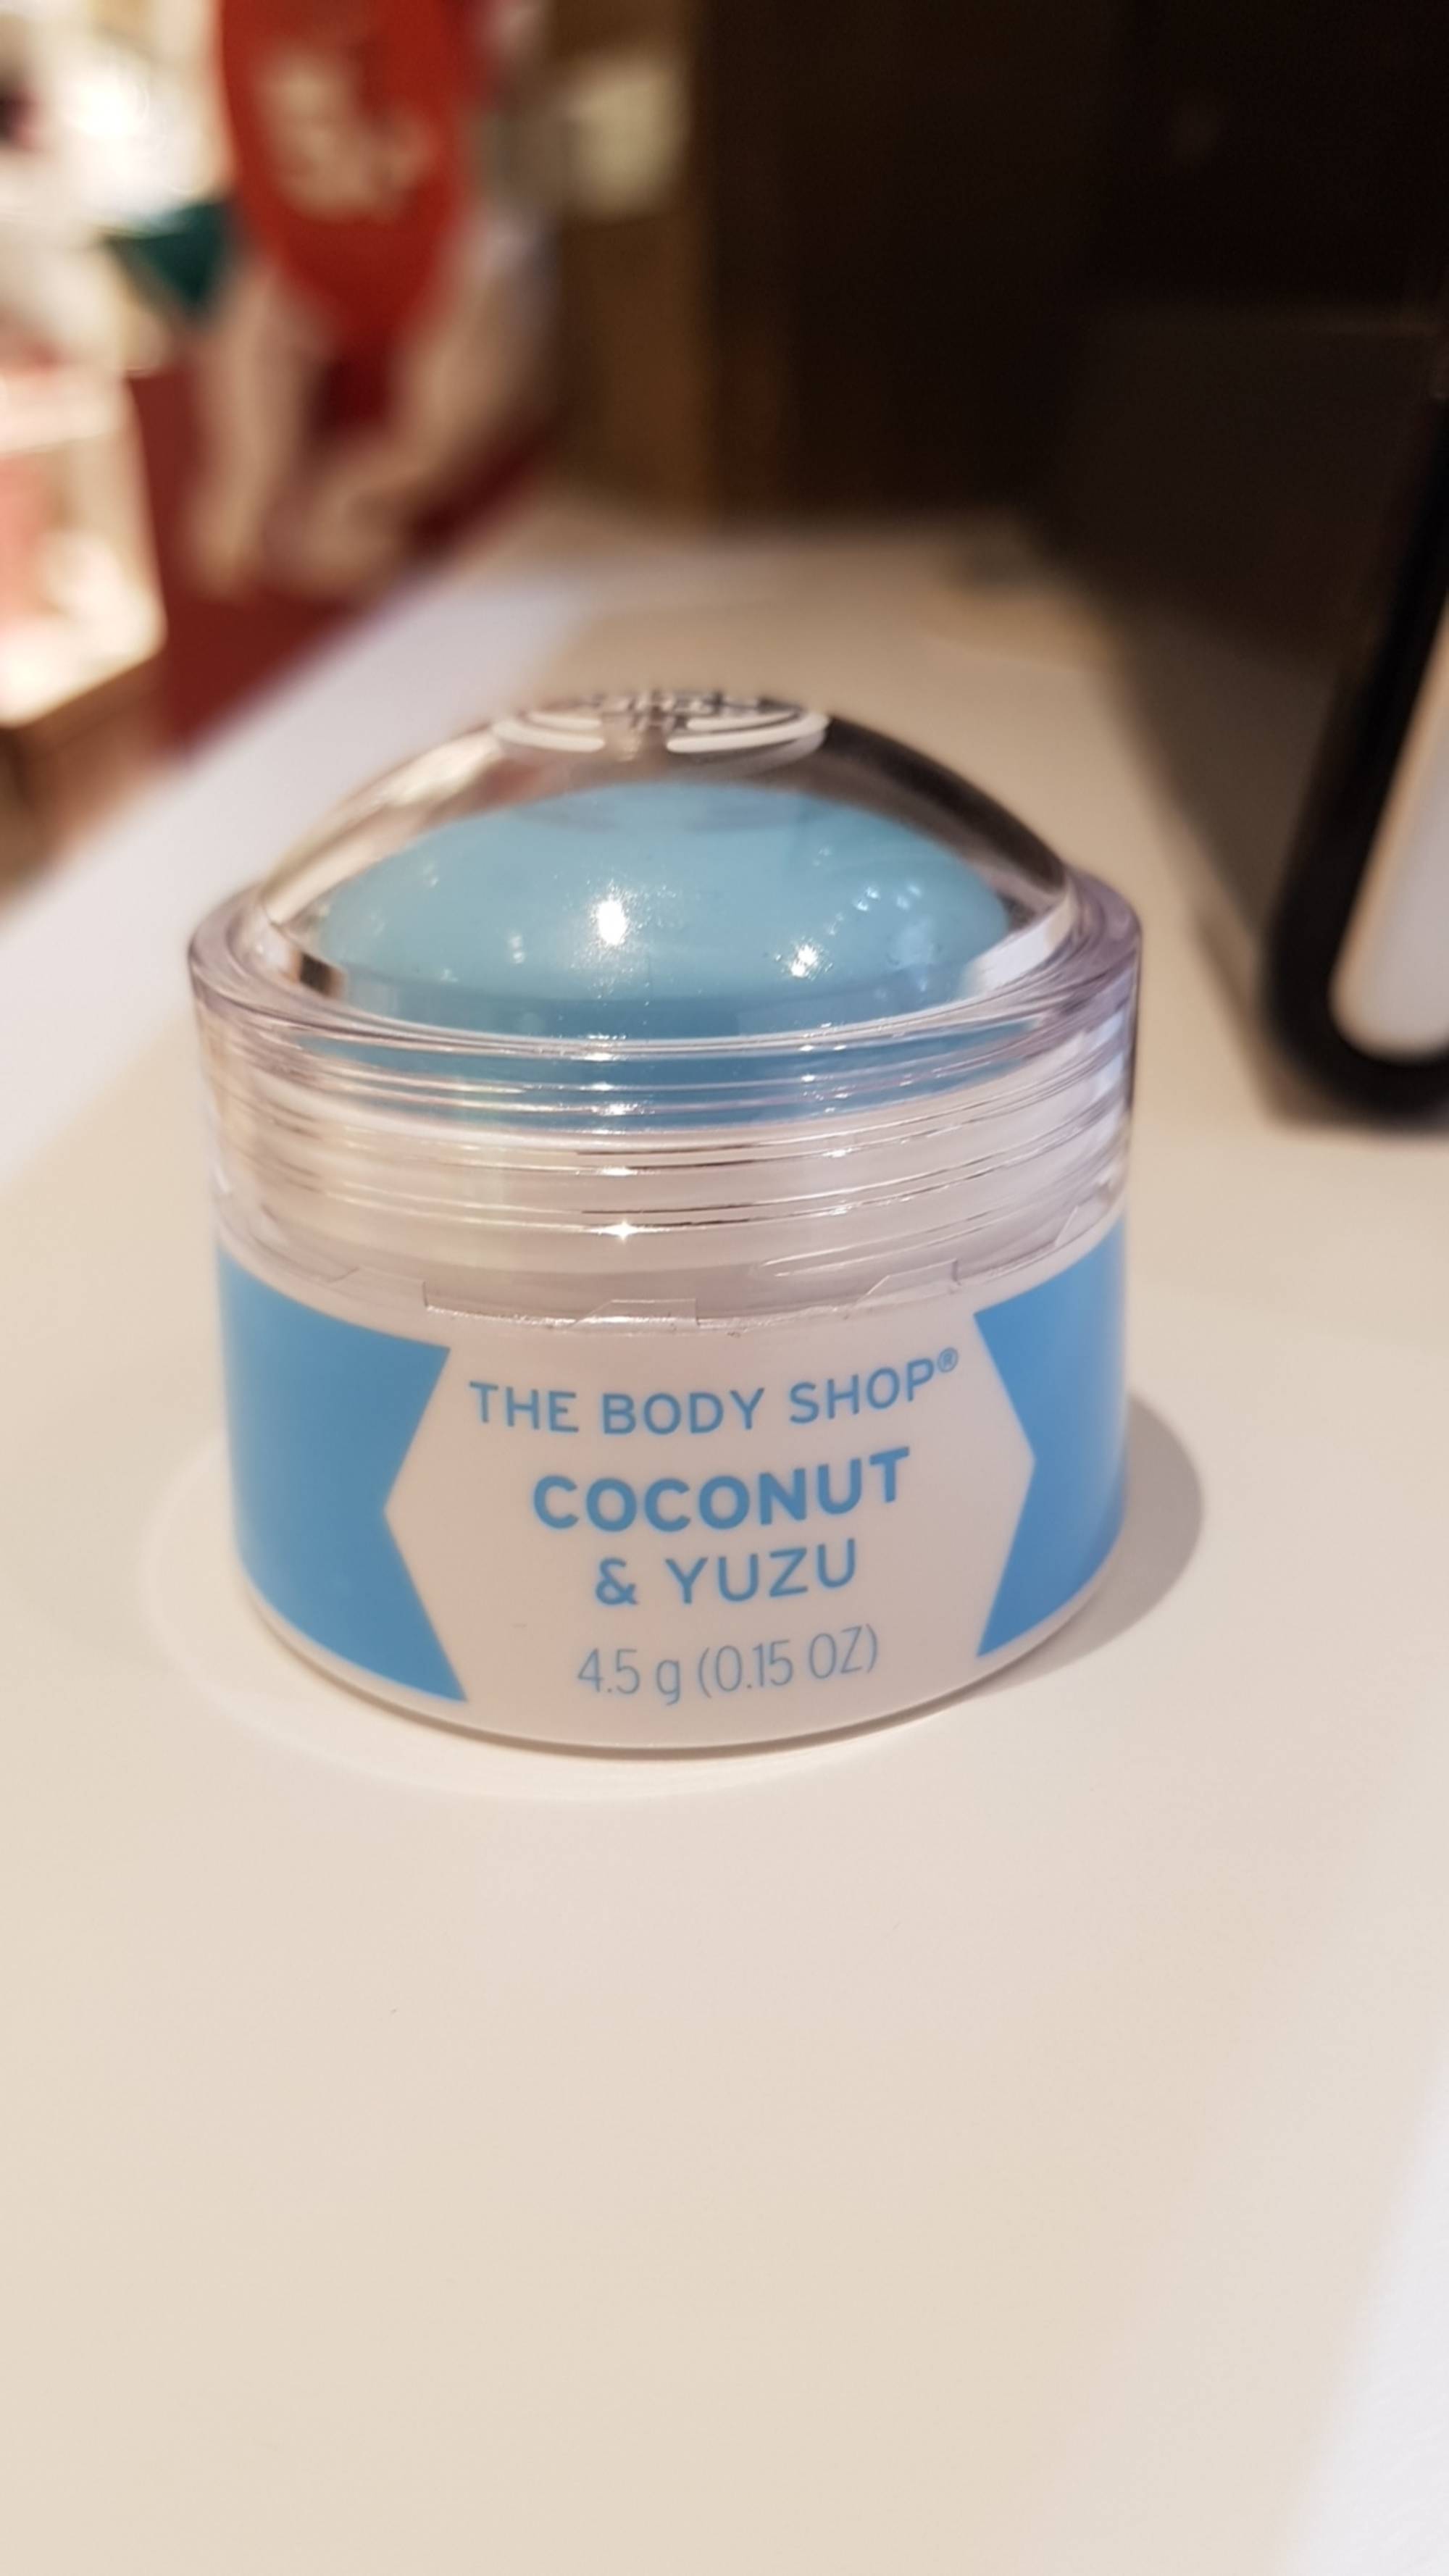 THE BODY SHOP - Coconut & yuzu - Parfum solide